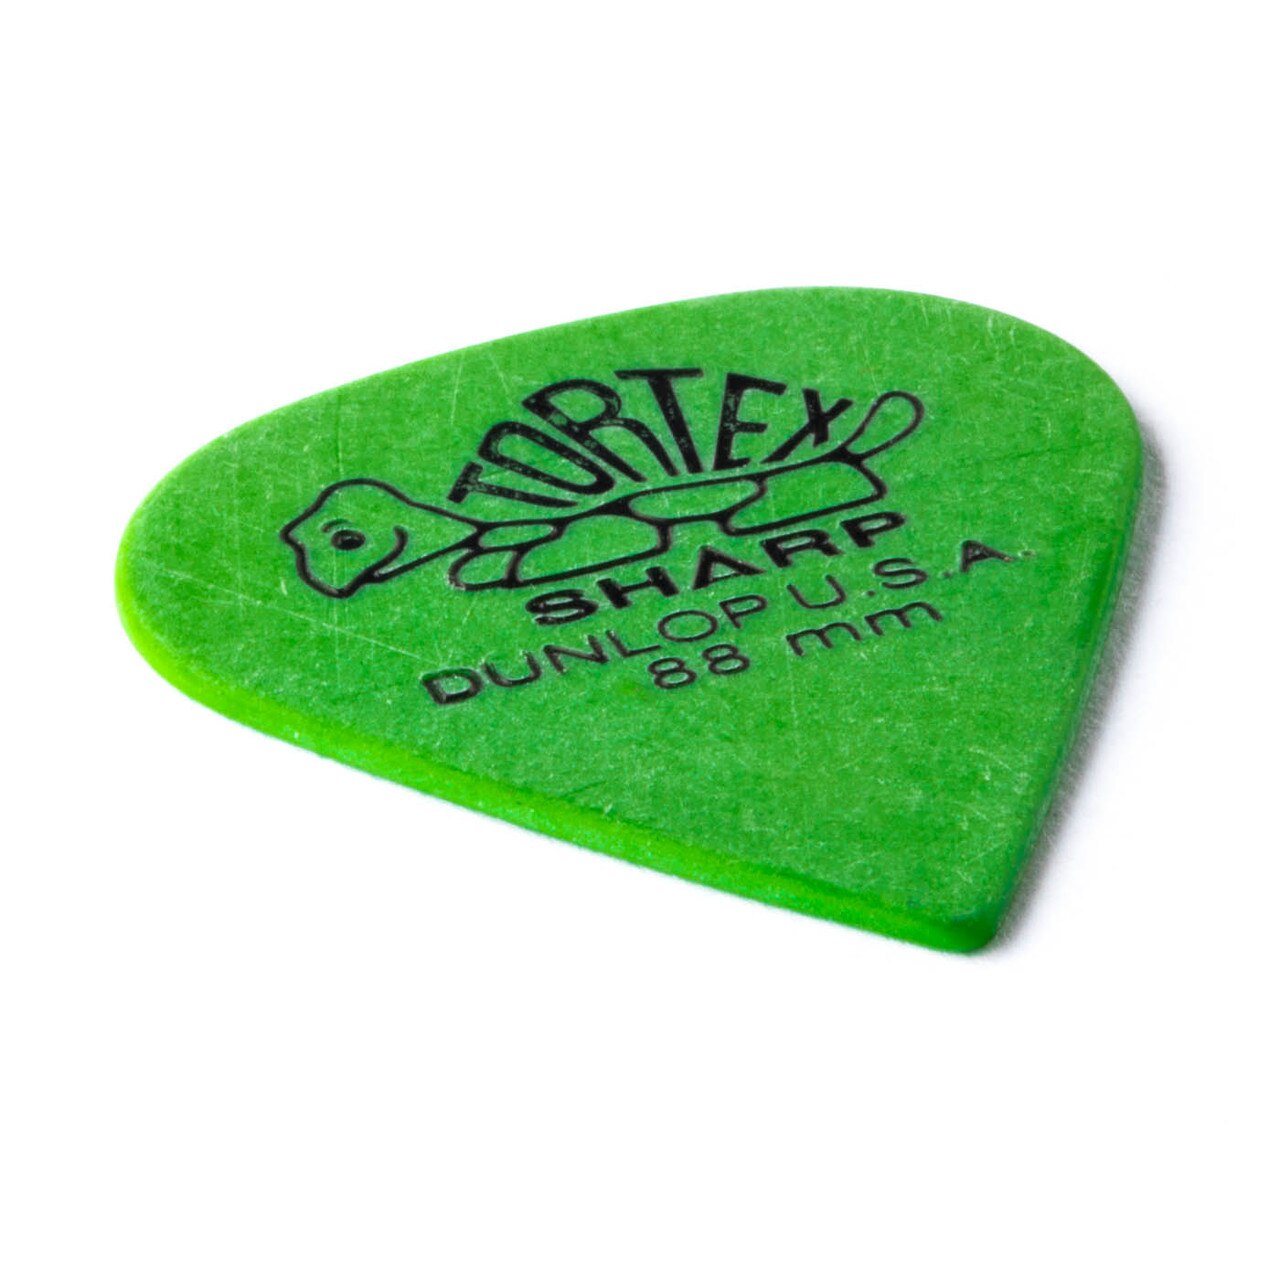 Jim Dunlop Tortex Sharp 412 0.88mm - Guitar pick - Variation 1